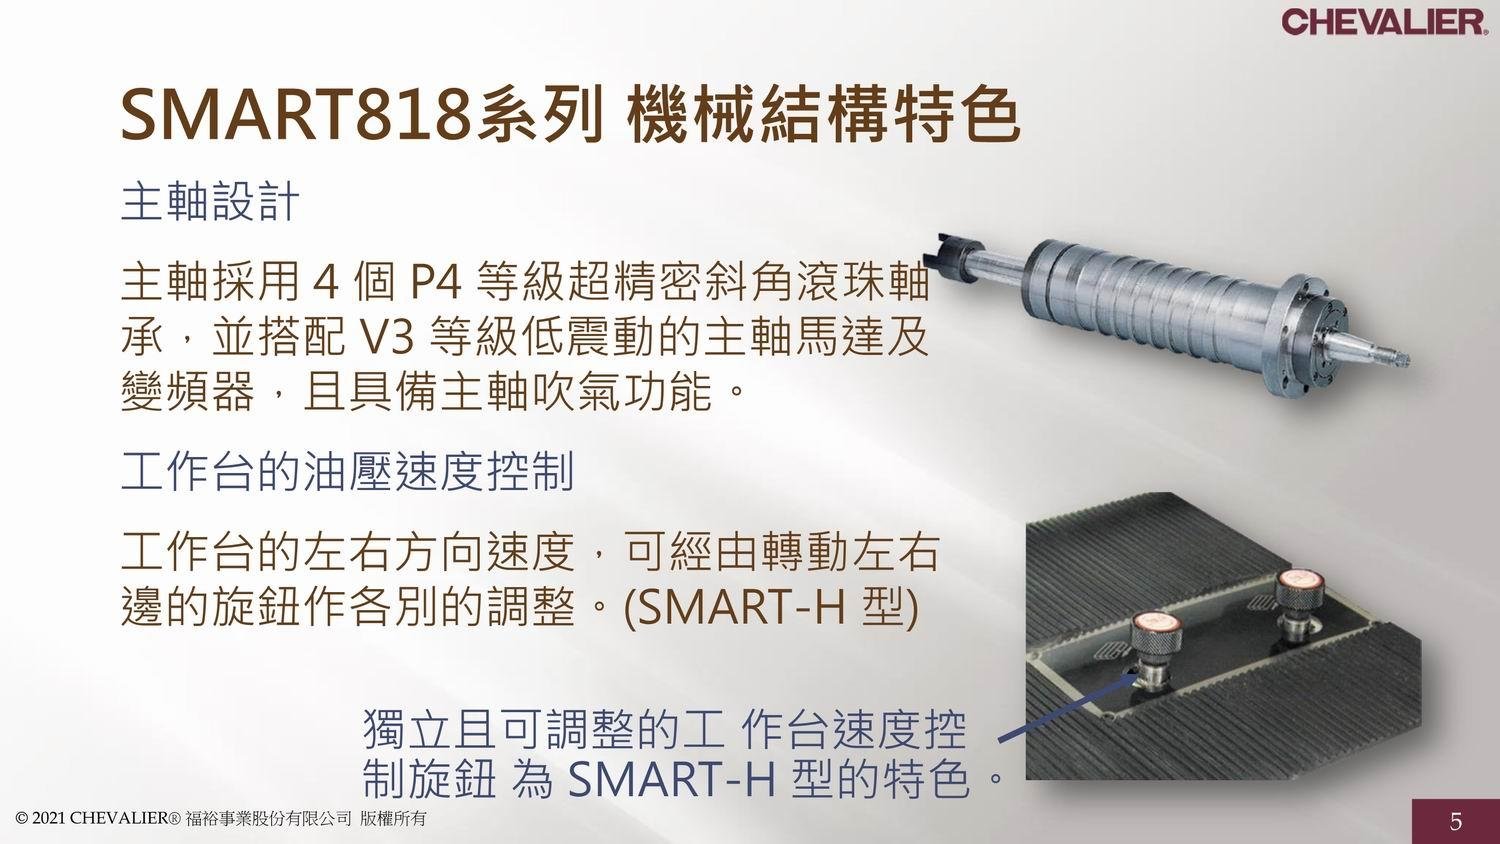 SMART-B818III 新能源产业 超声波焊接头-台湾福裕 CHEVALIER 2